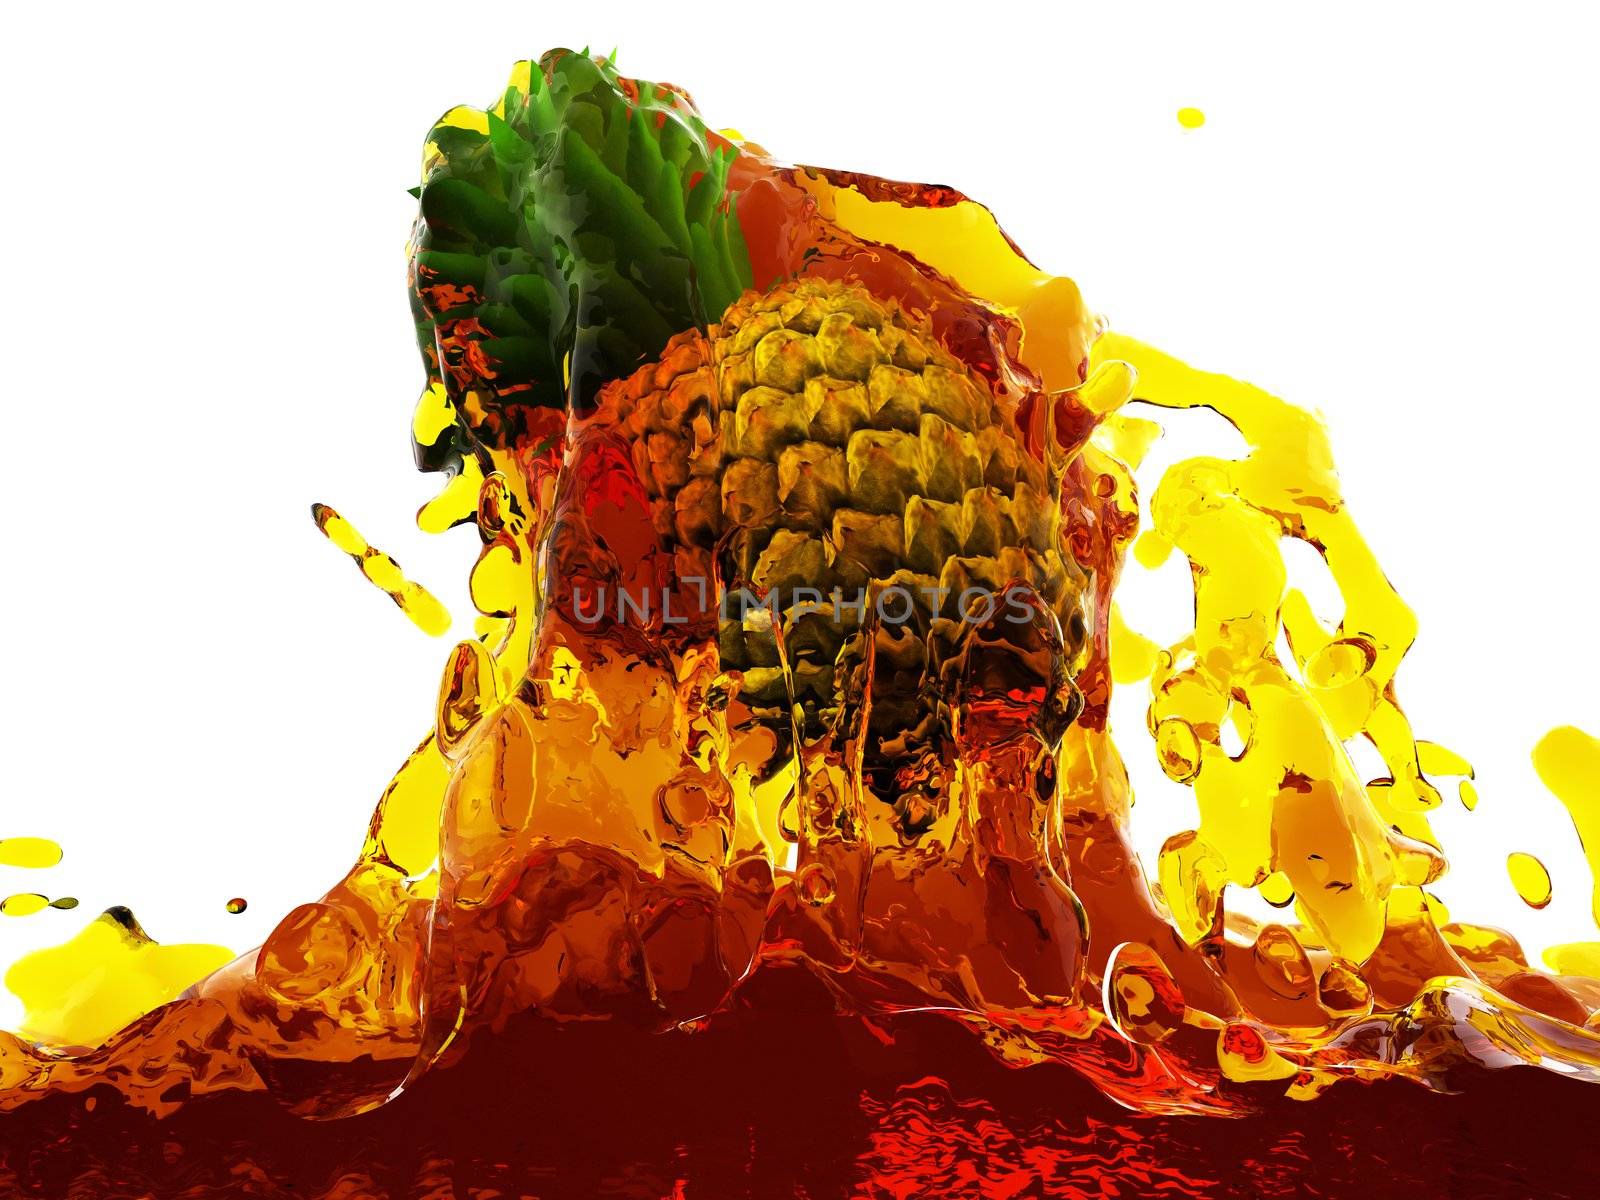 Pineapple in juice by videodoctor